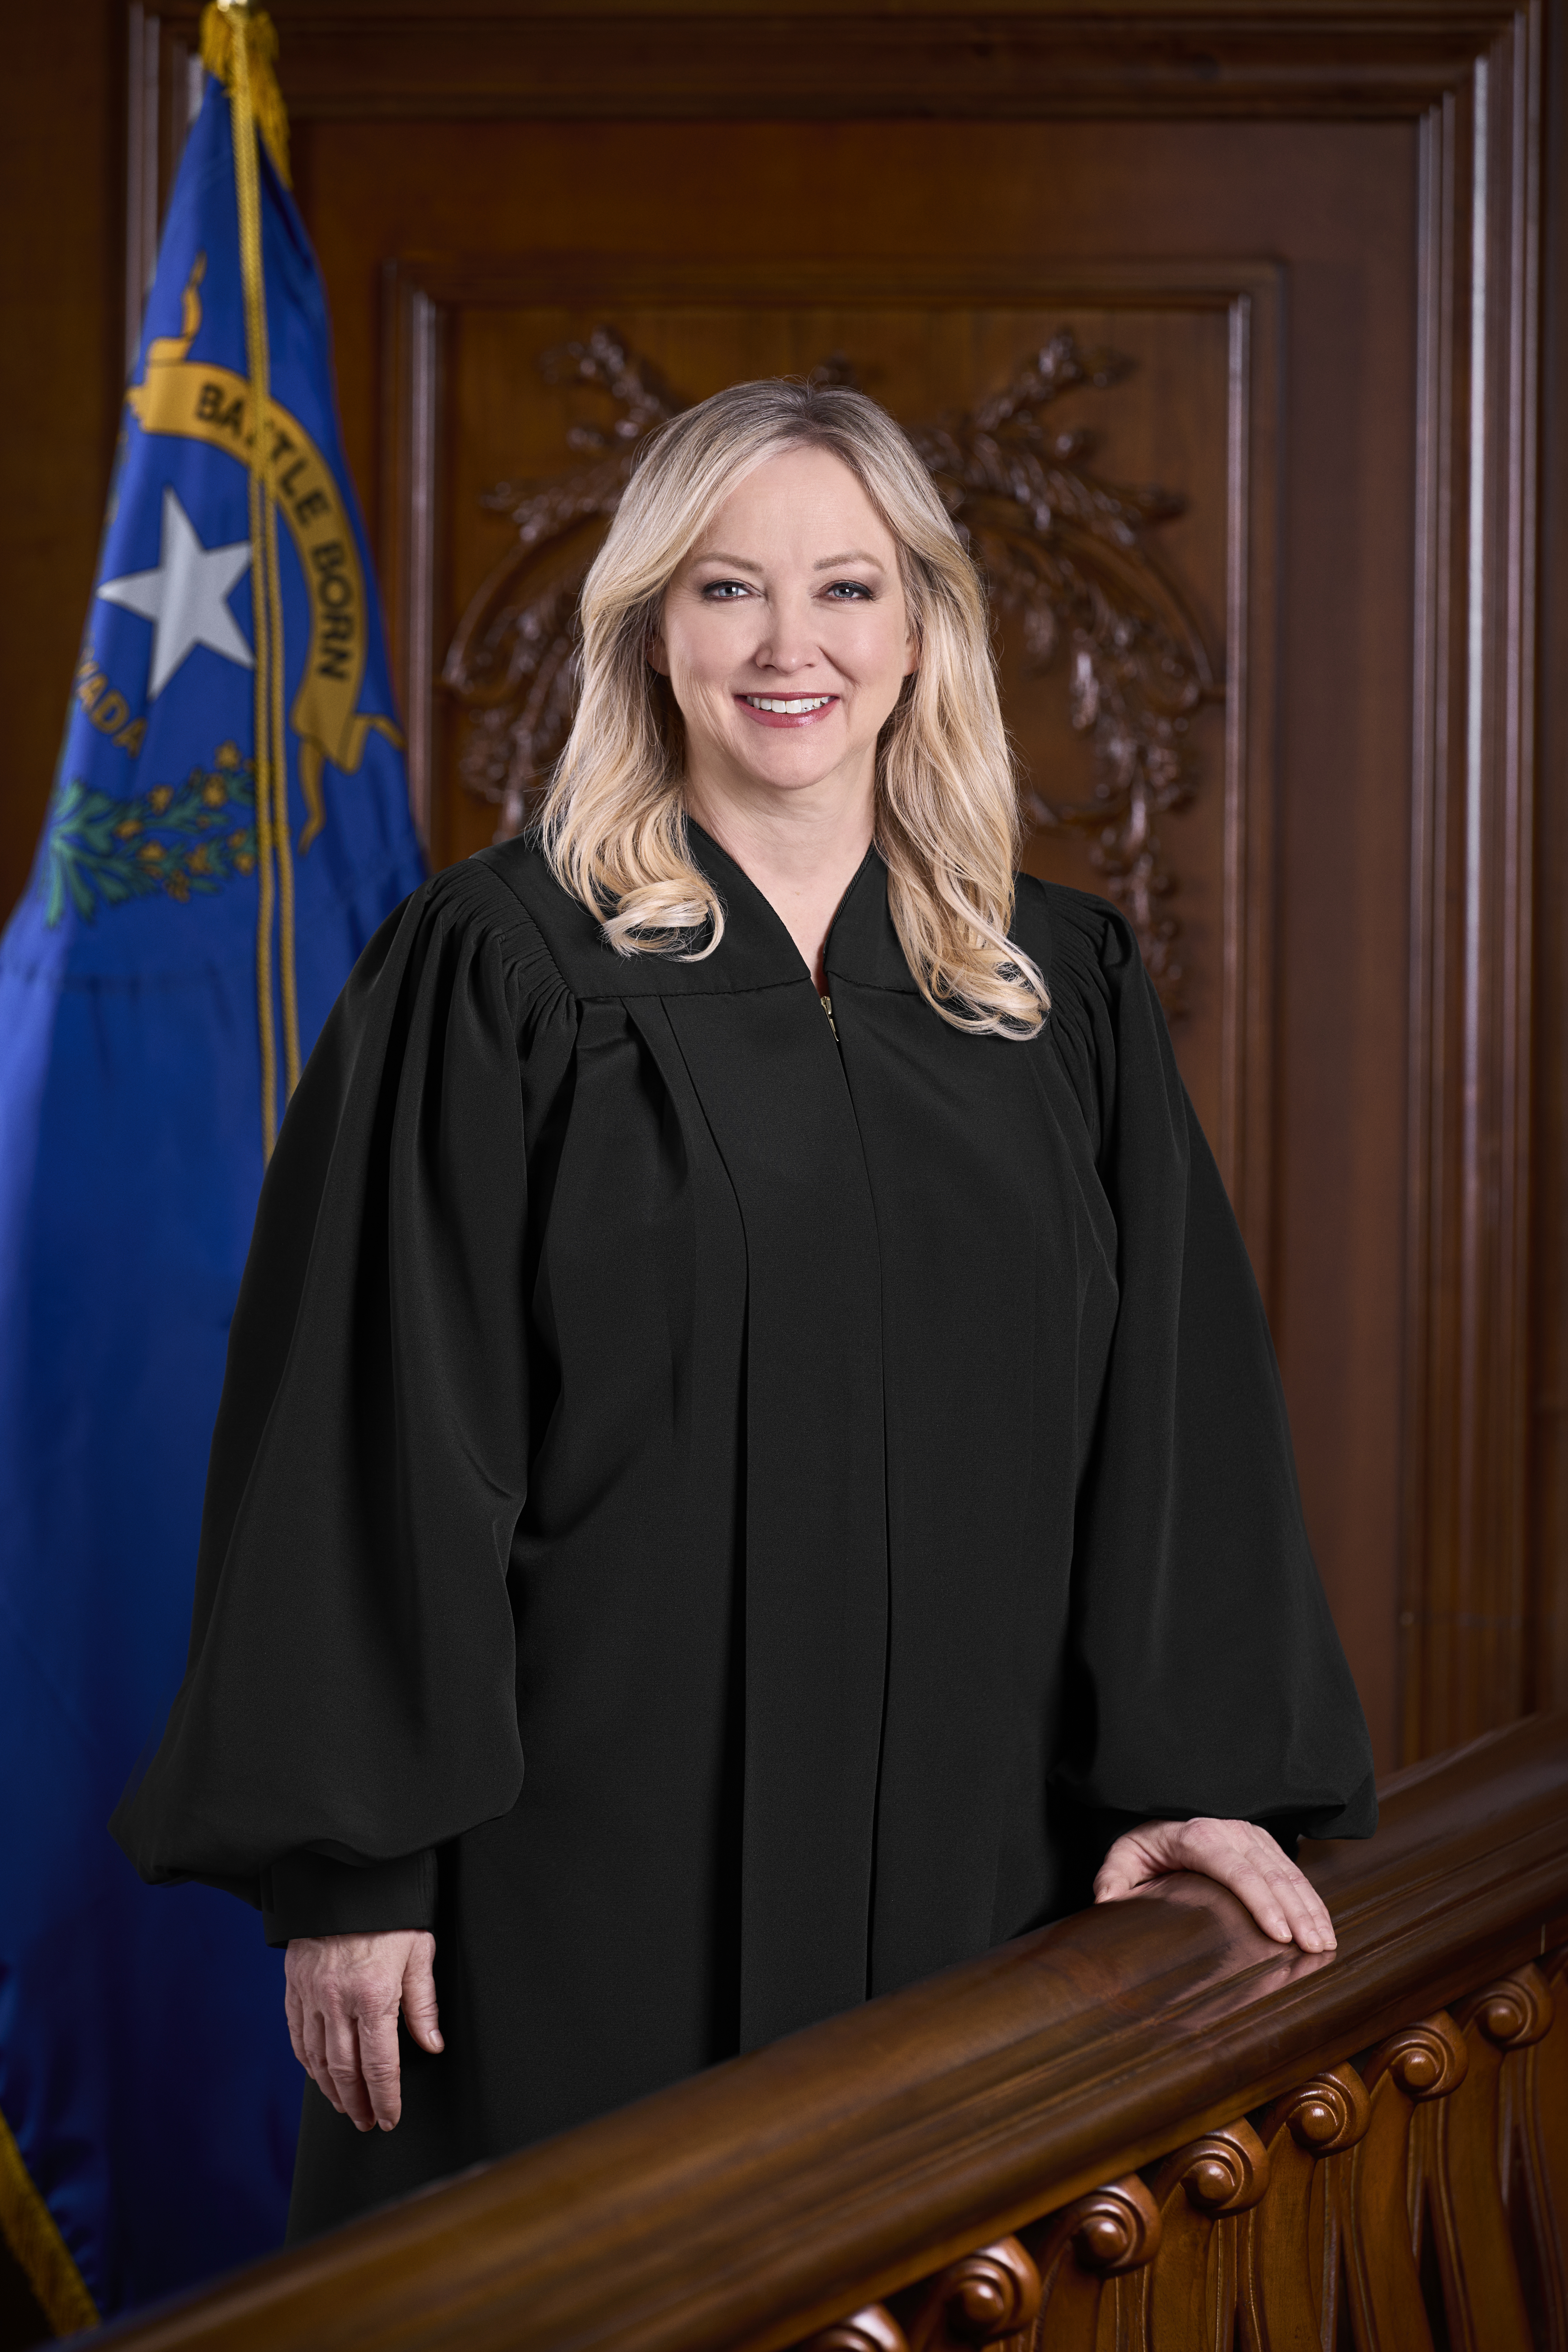 Justice Linda Marie Bell